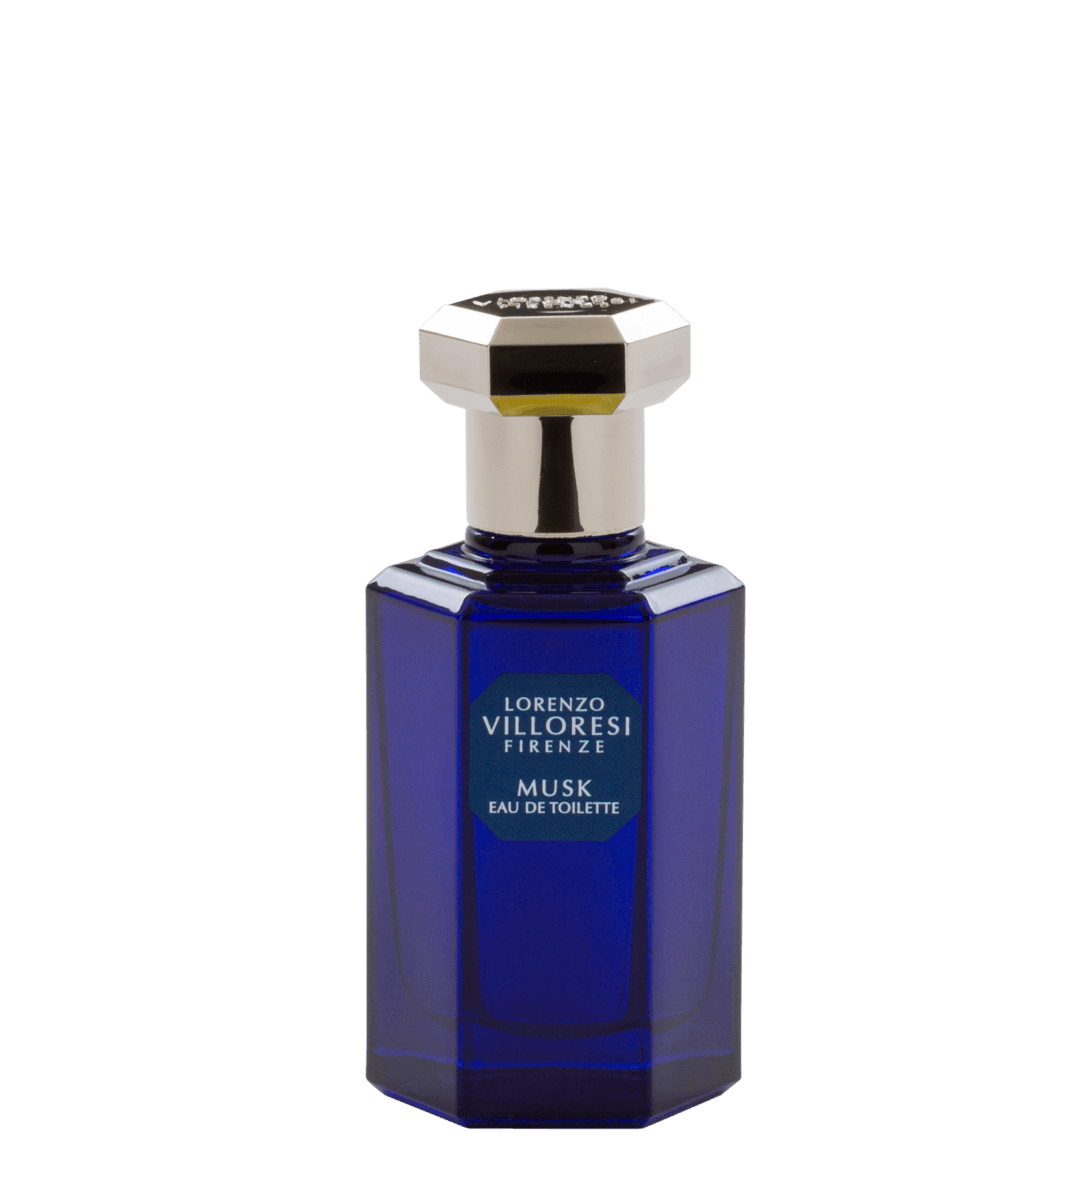 Lorenzo Villoresi - Musk eau de toilette 50 ml | Perfume Lounge